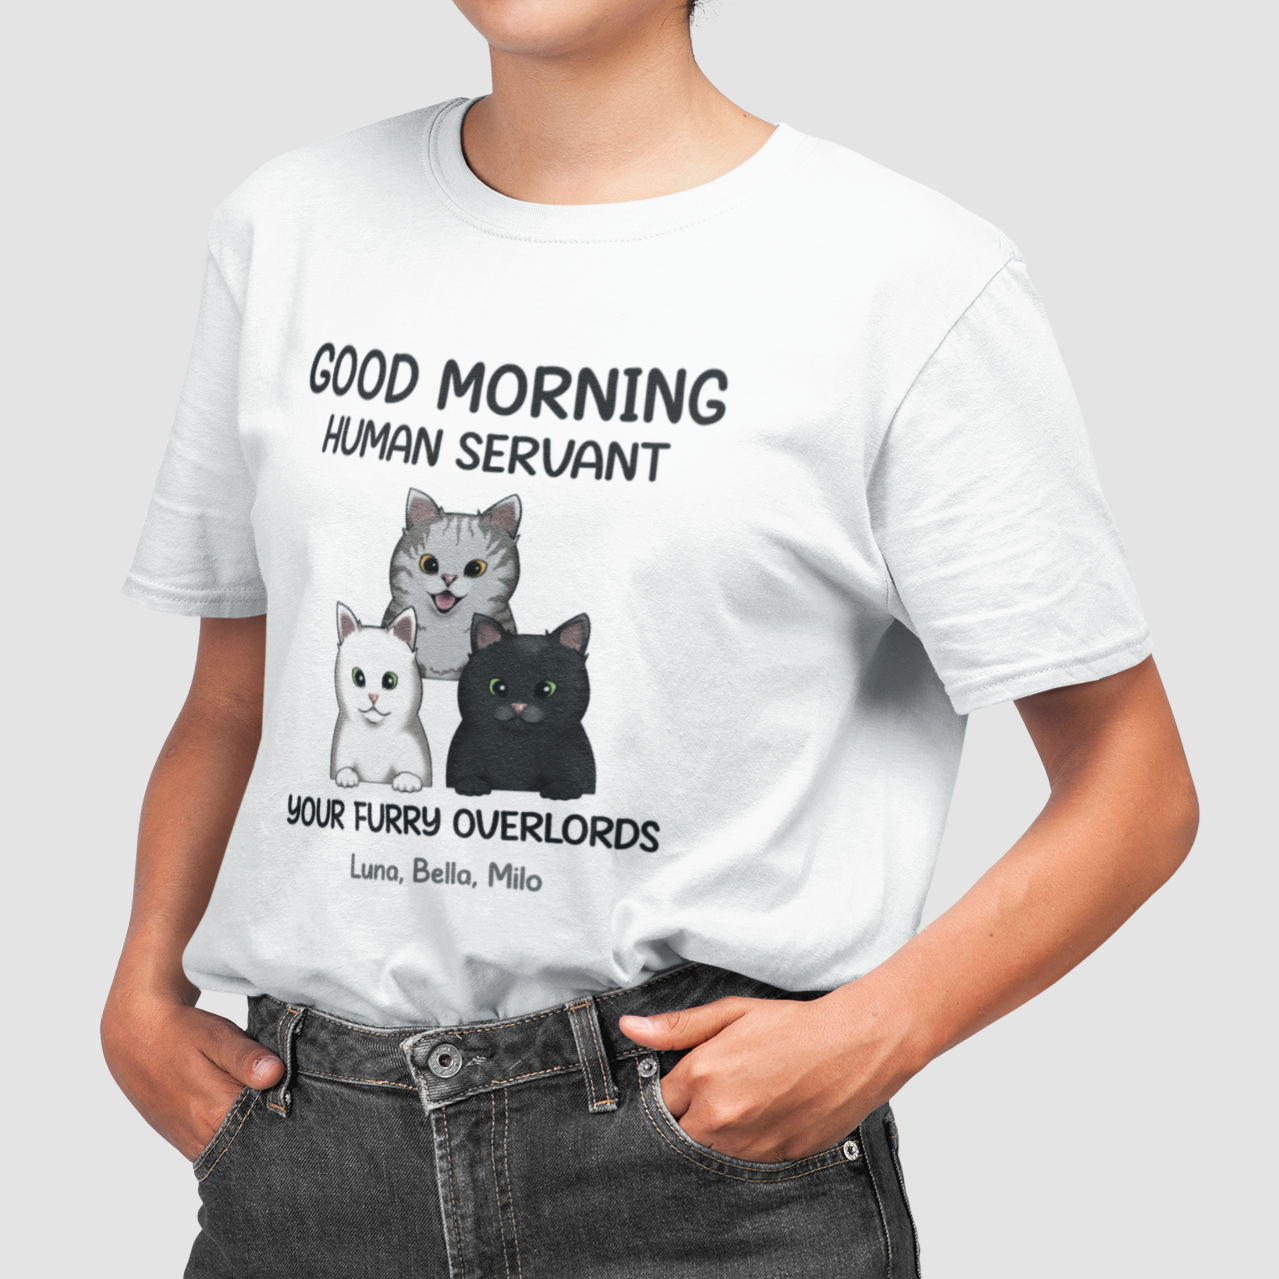 Women wearing a Personalized Human Servant T-Shirt with unique cat motif print.